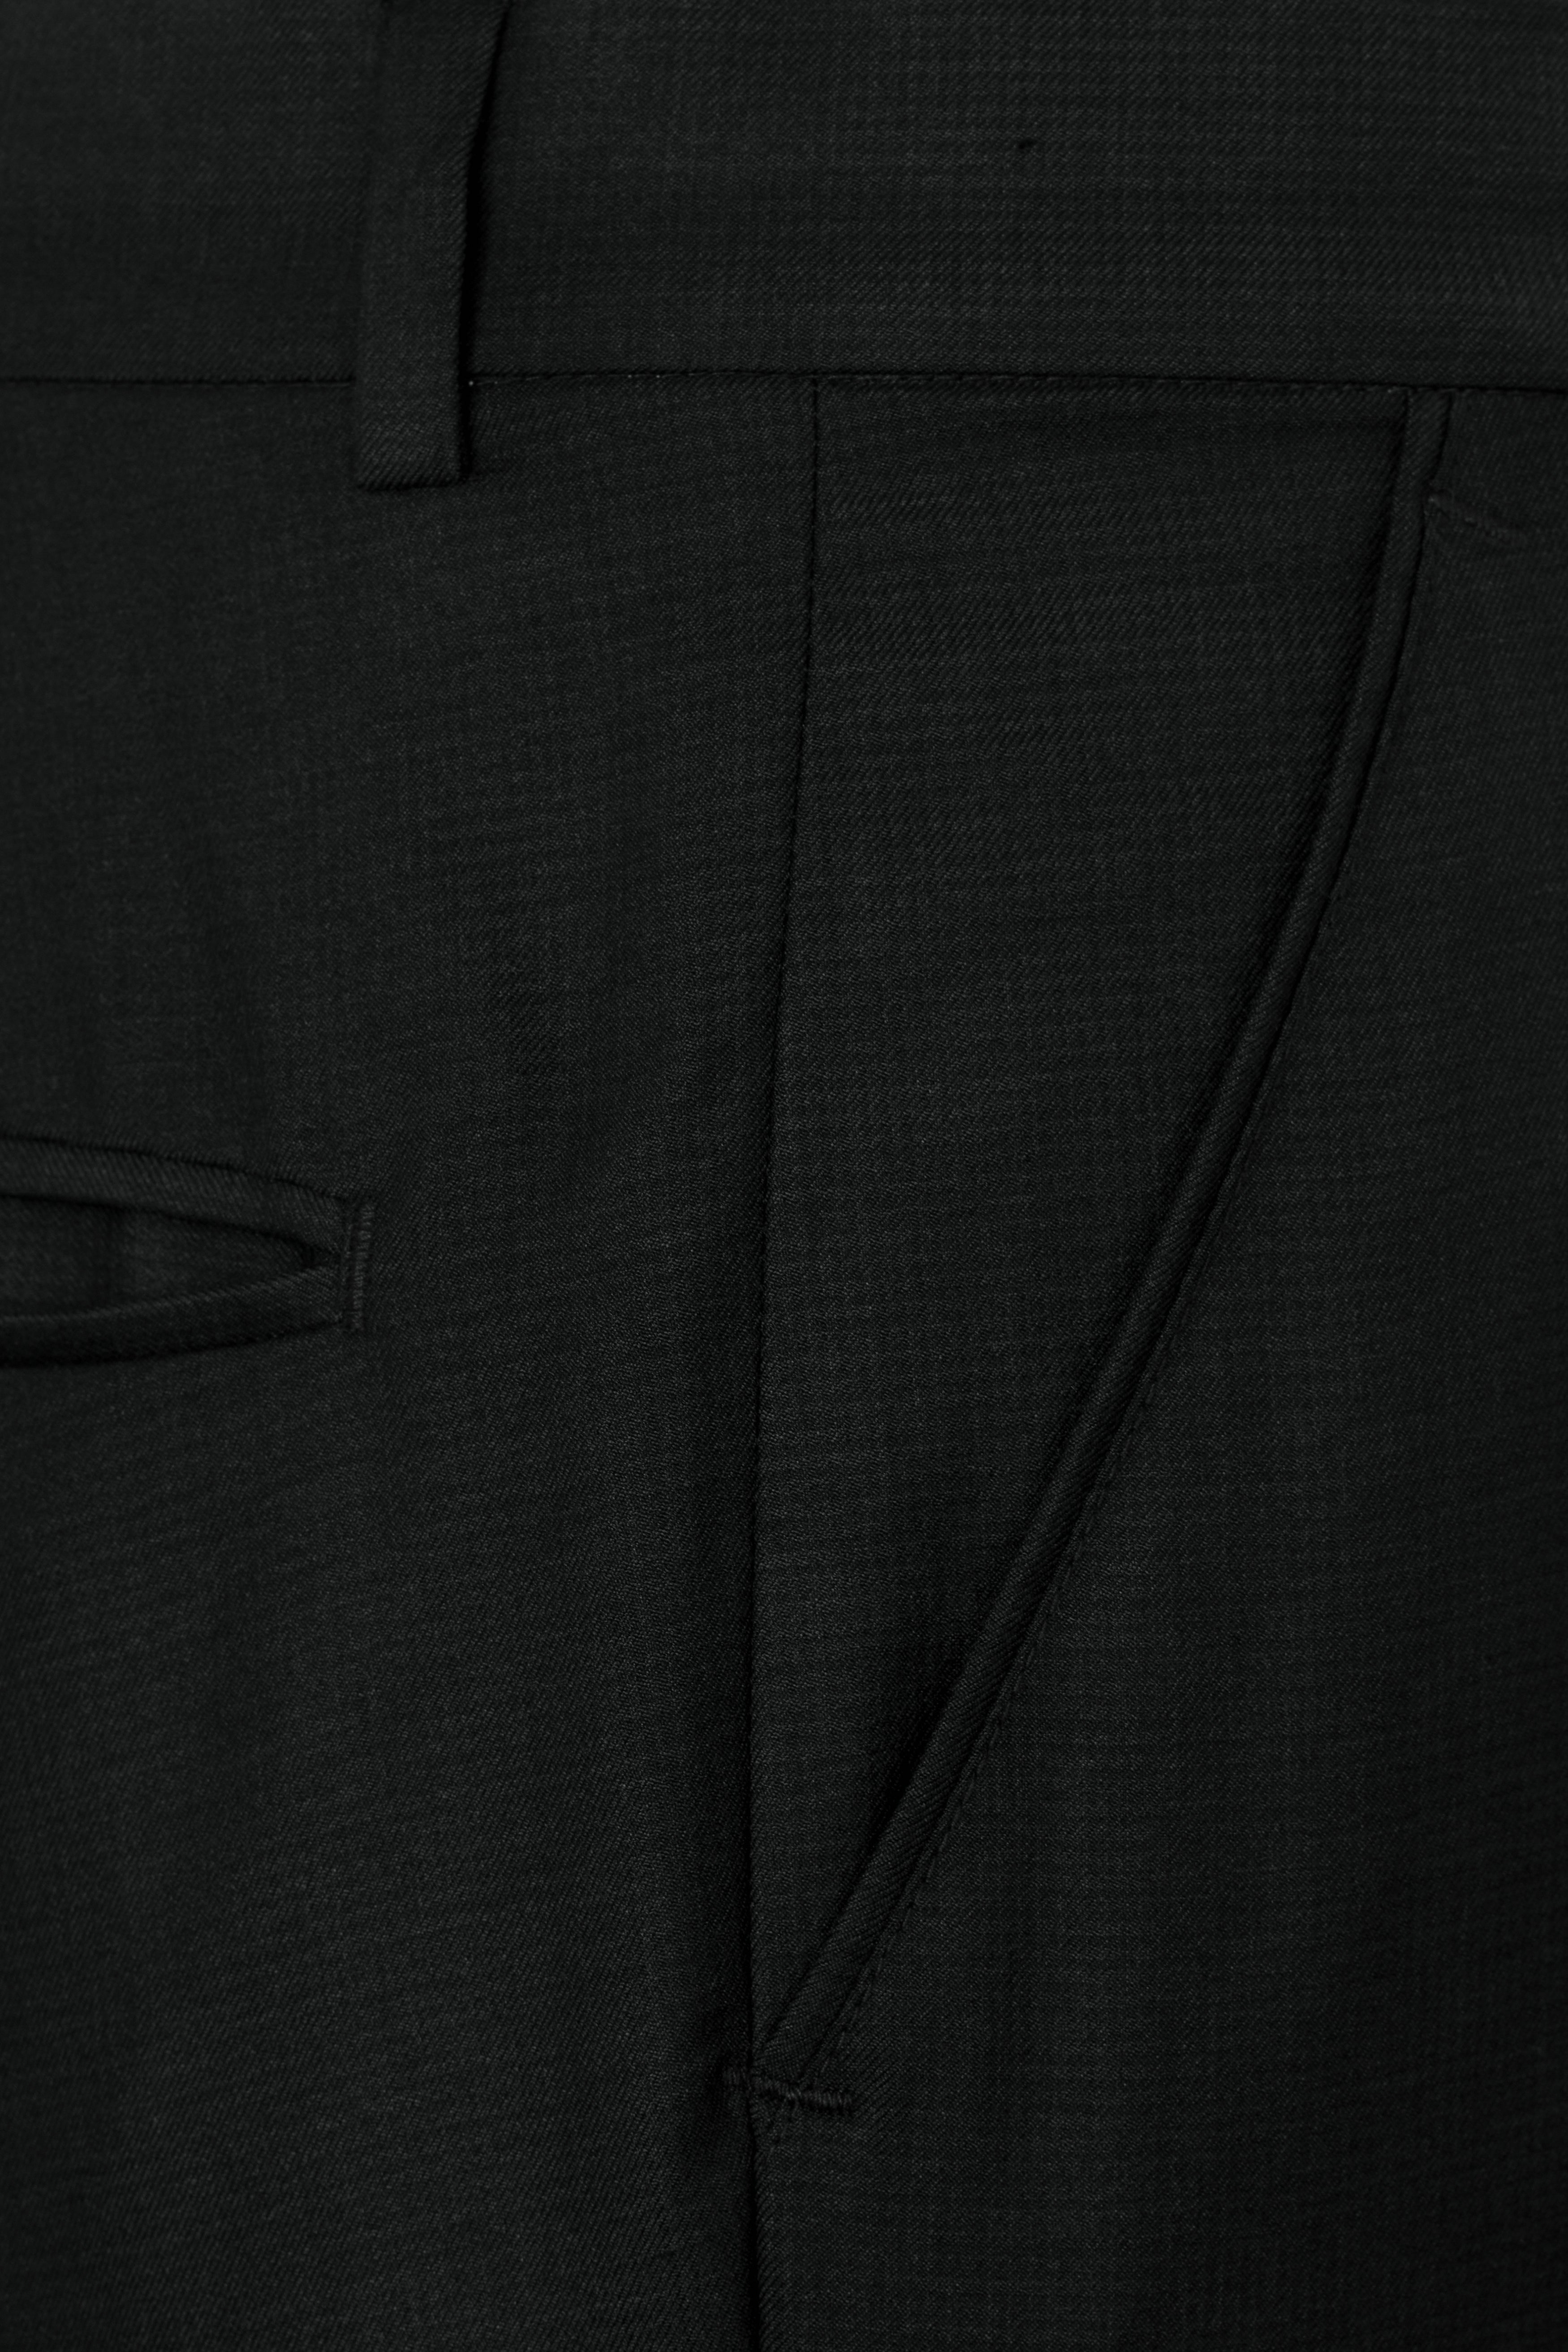 Jade Black Wool Rich Bandhgala Suit ST2818-BG-36,ST2818-BG-38,ST2818-BG-40,ST2818-BG-42,ST2818-BG-44,ST2818-BG-46,ST2818-BG-48,ST2818-BG-50,ST2818-BG-52,ST2818-BG-54,ST2818-BG-56,ST2818-BG-58,ST2818-BG-60